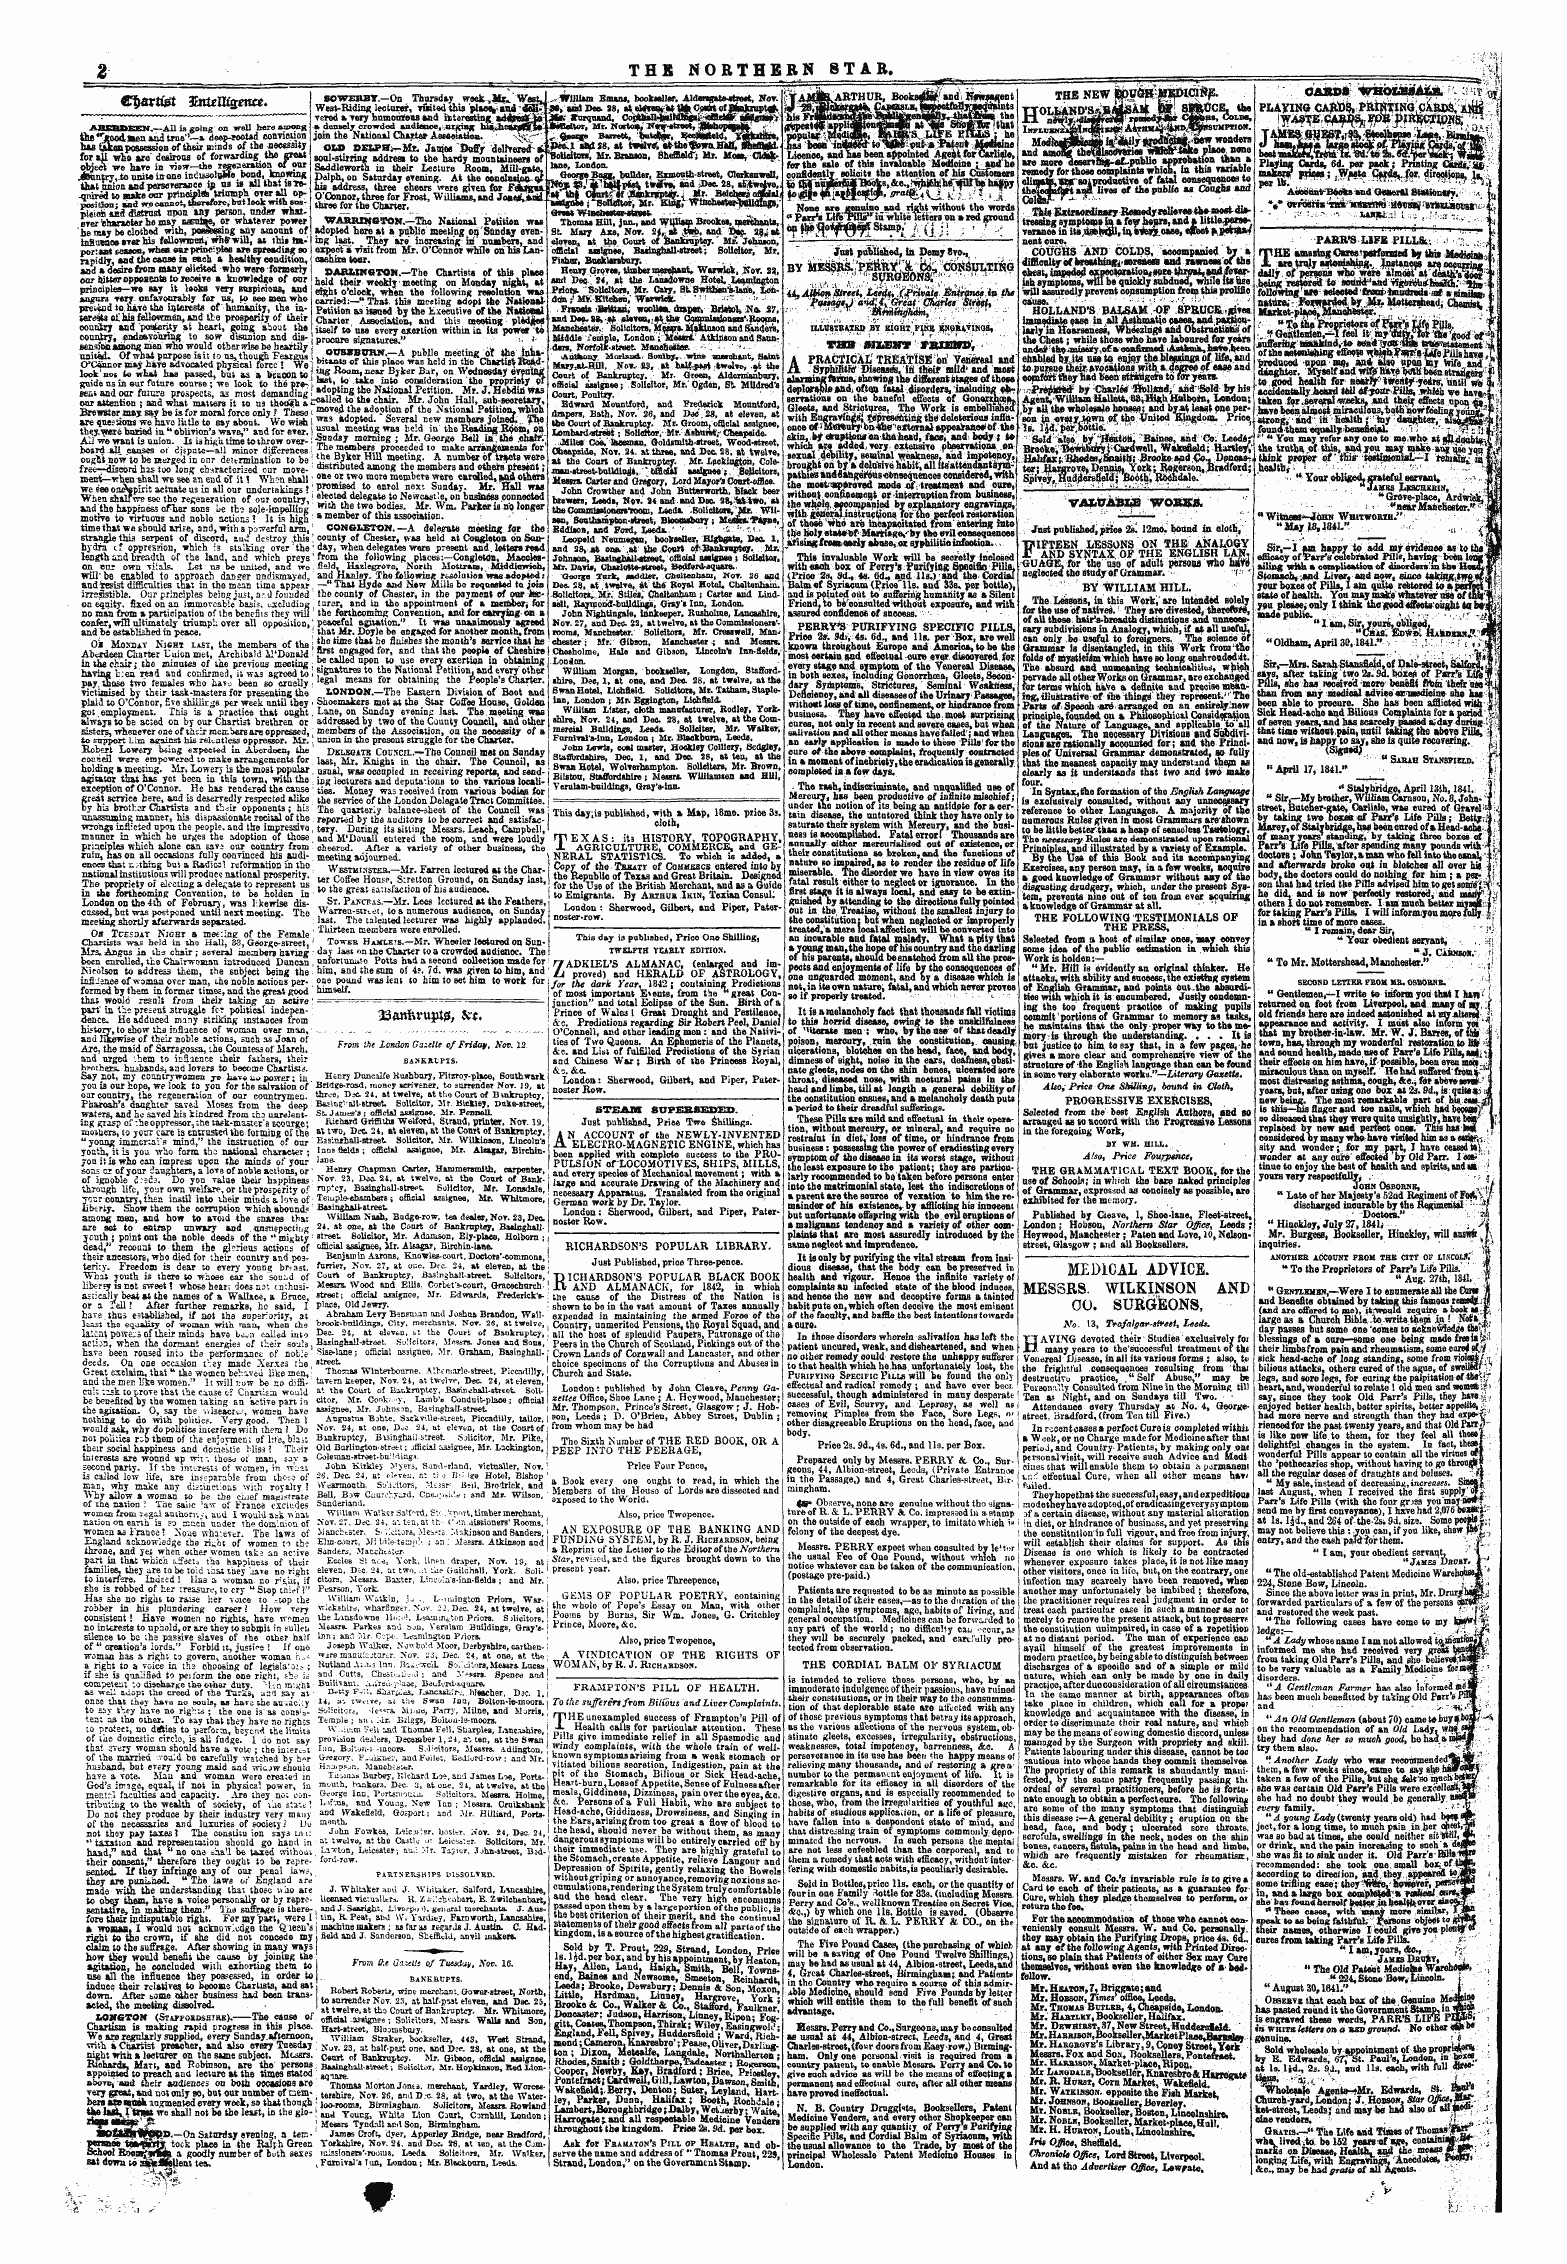 Northern Star (1837-1852): jS F Y, 4th edition - 23anfcvu£Tg, &*.